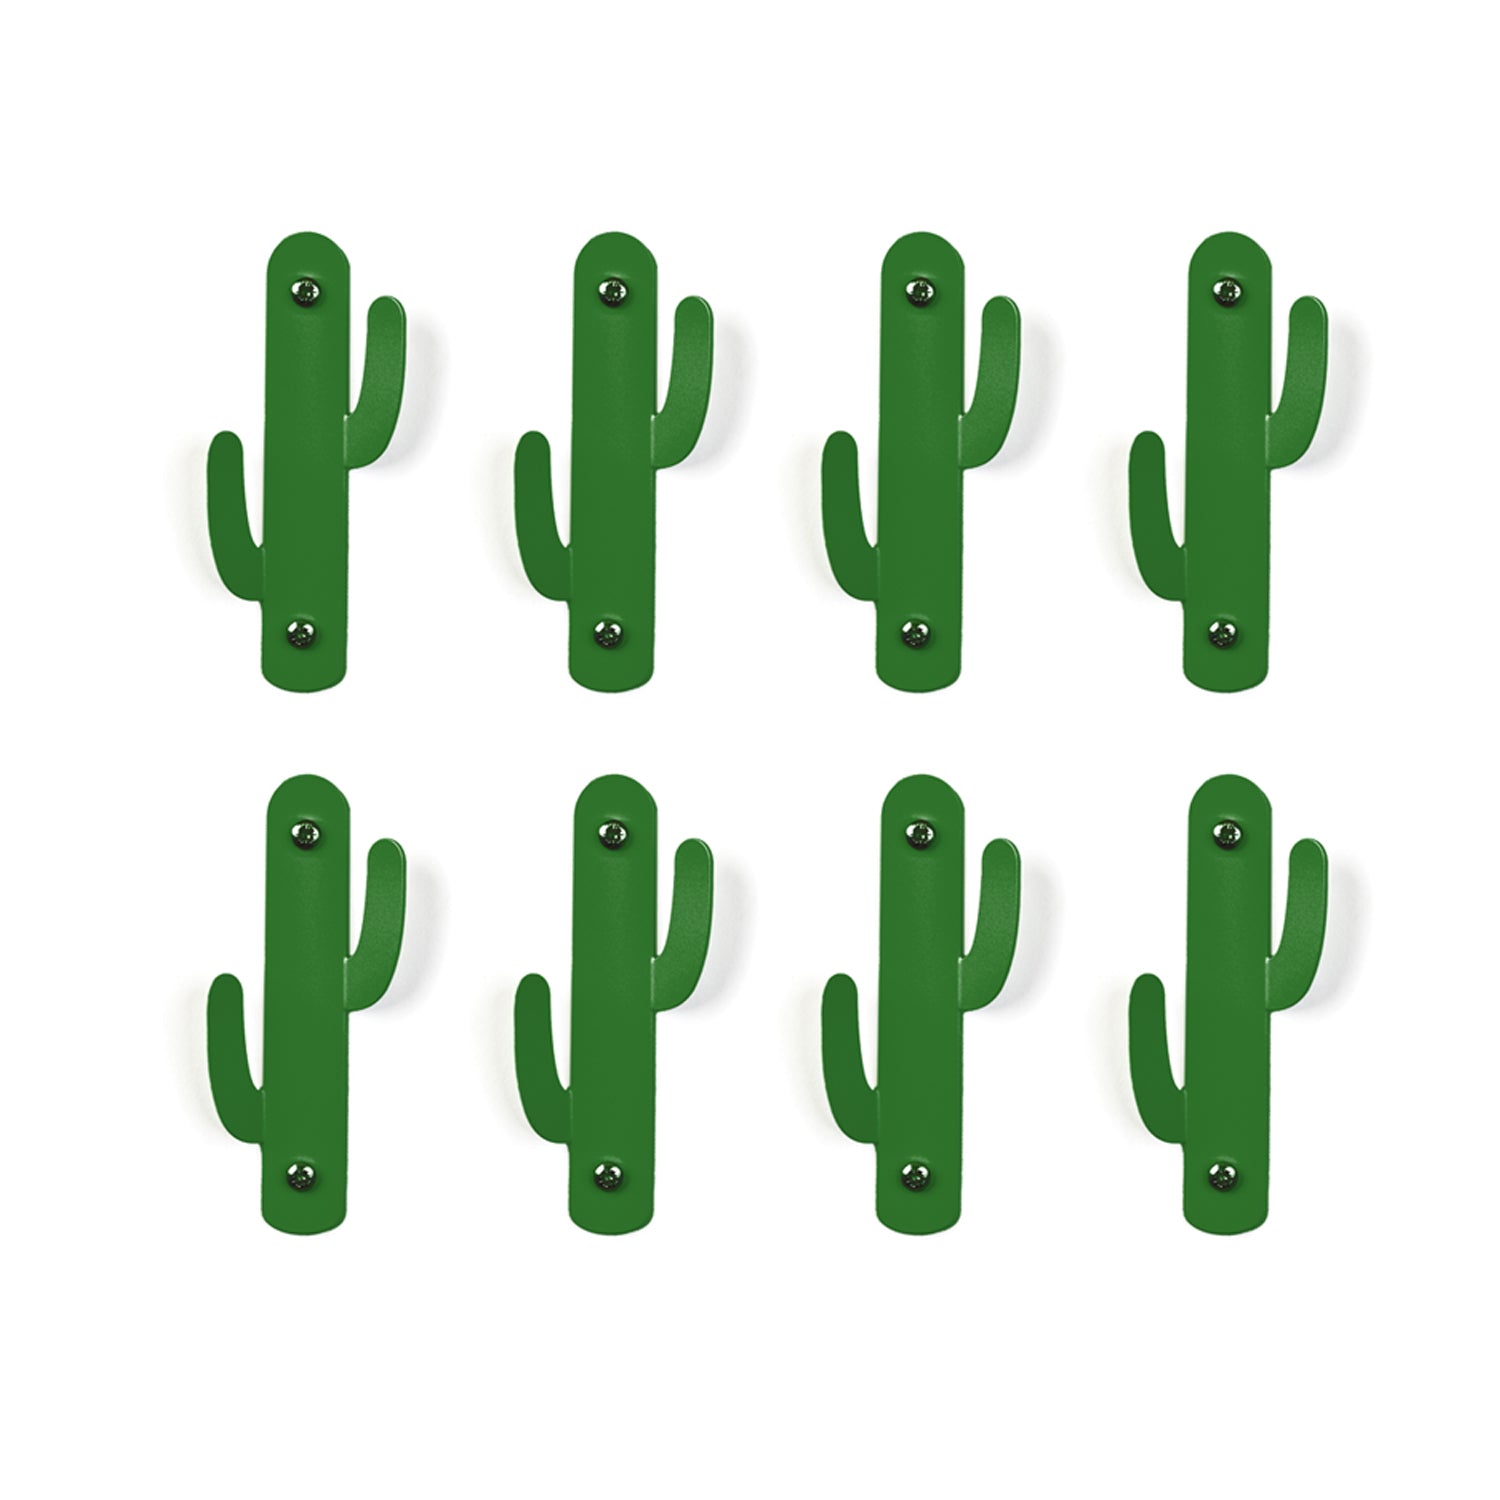 Okunaii Green Cactus Wall Mount Coat Hooks (Pack of 8) - Indoor Outdoors